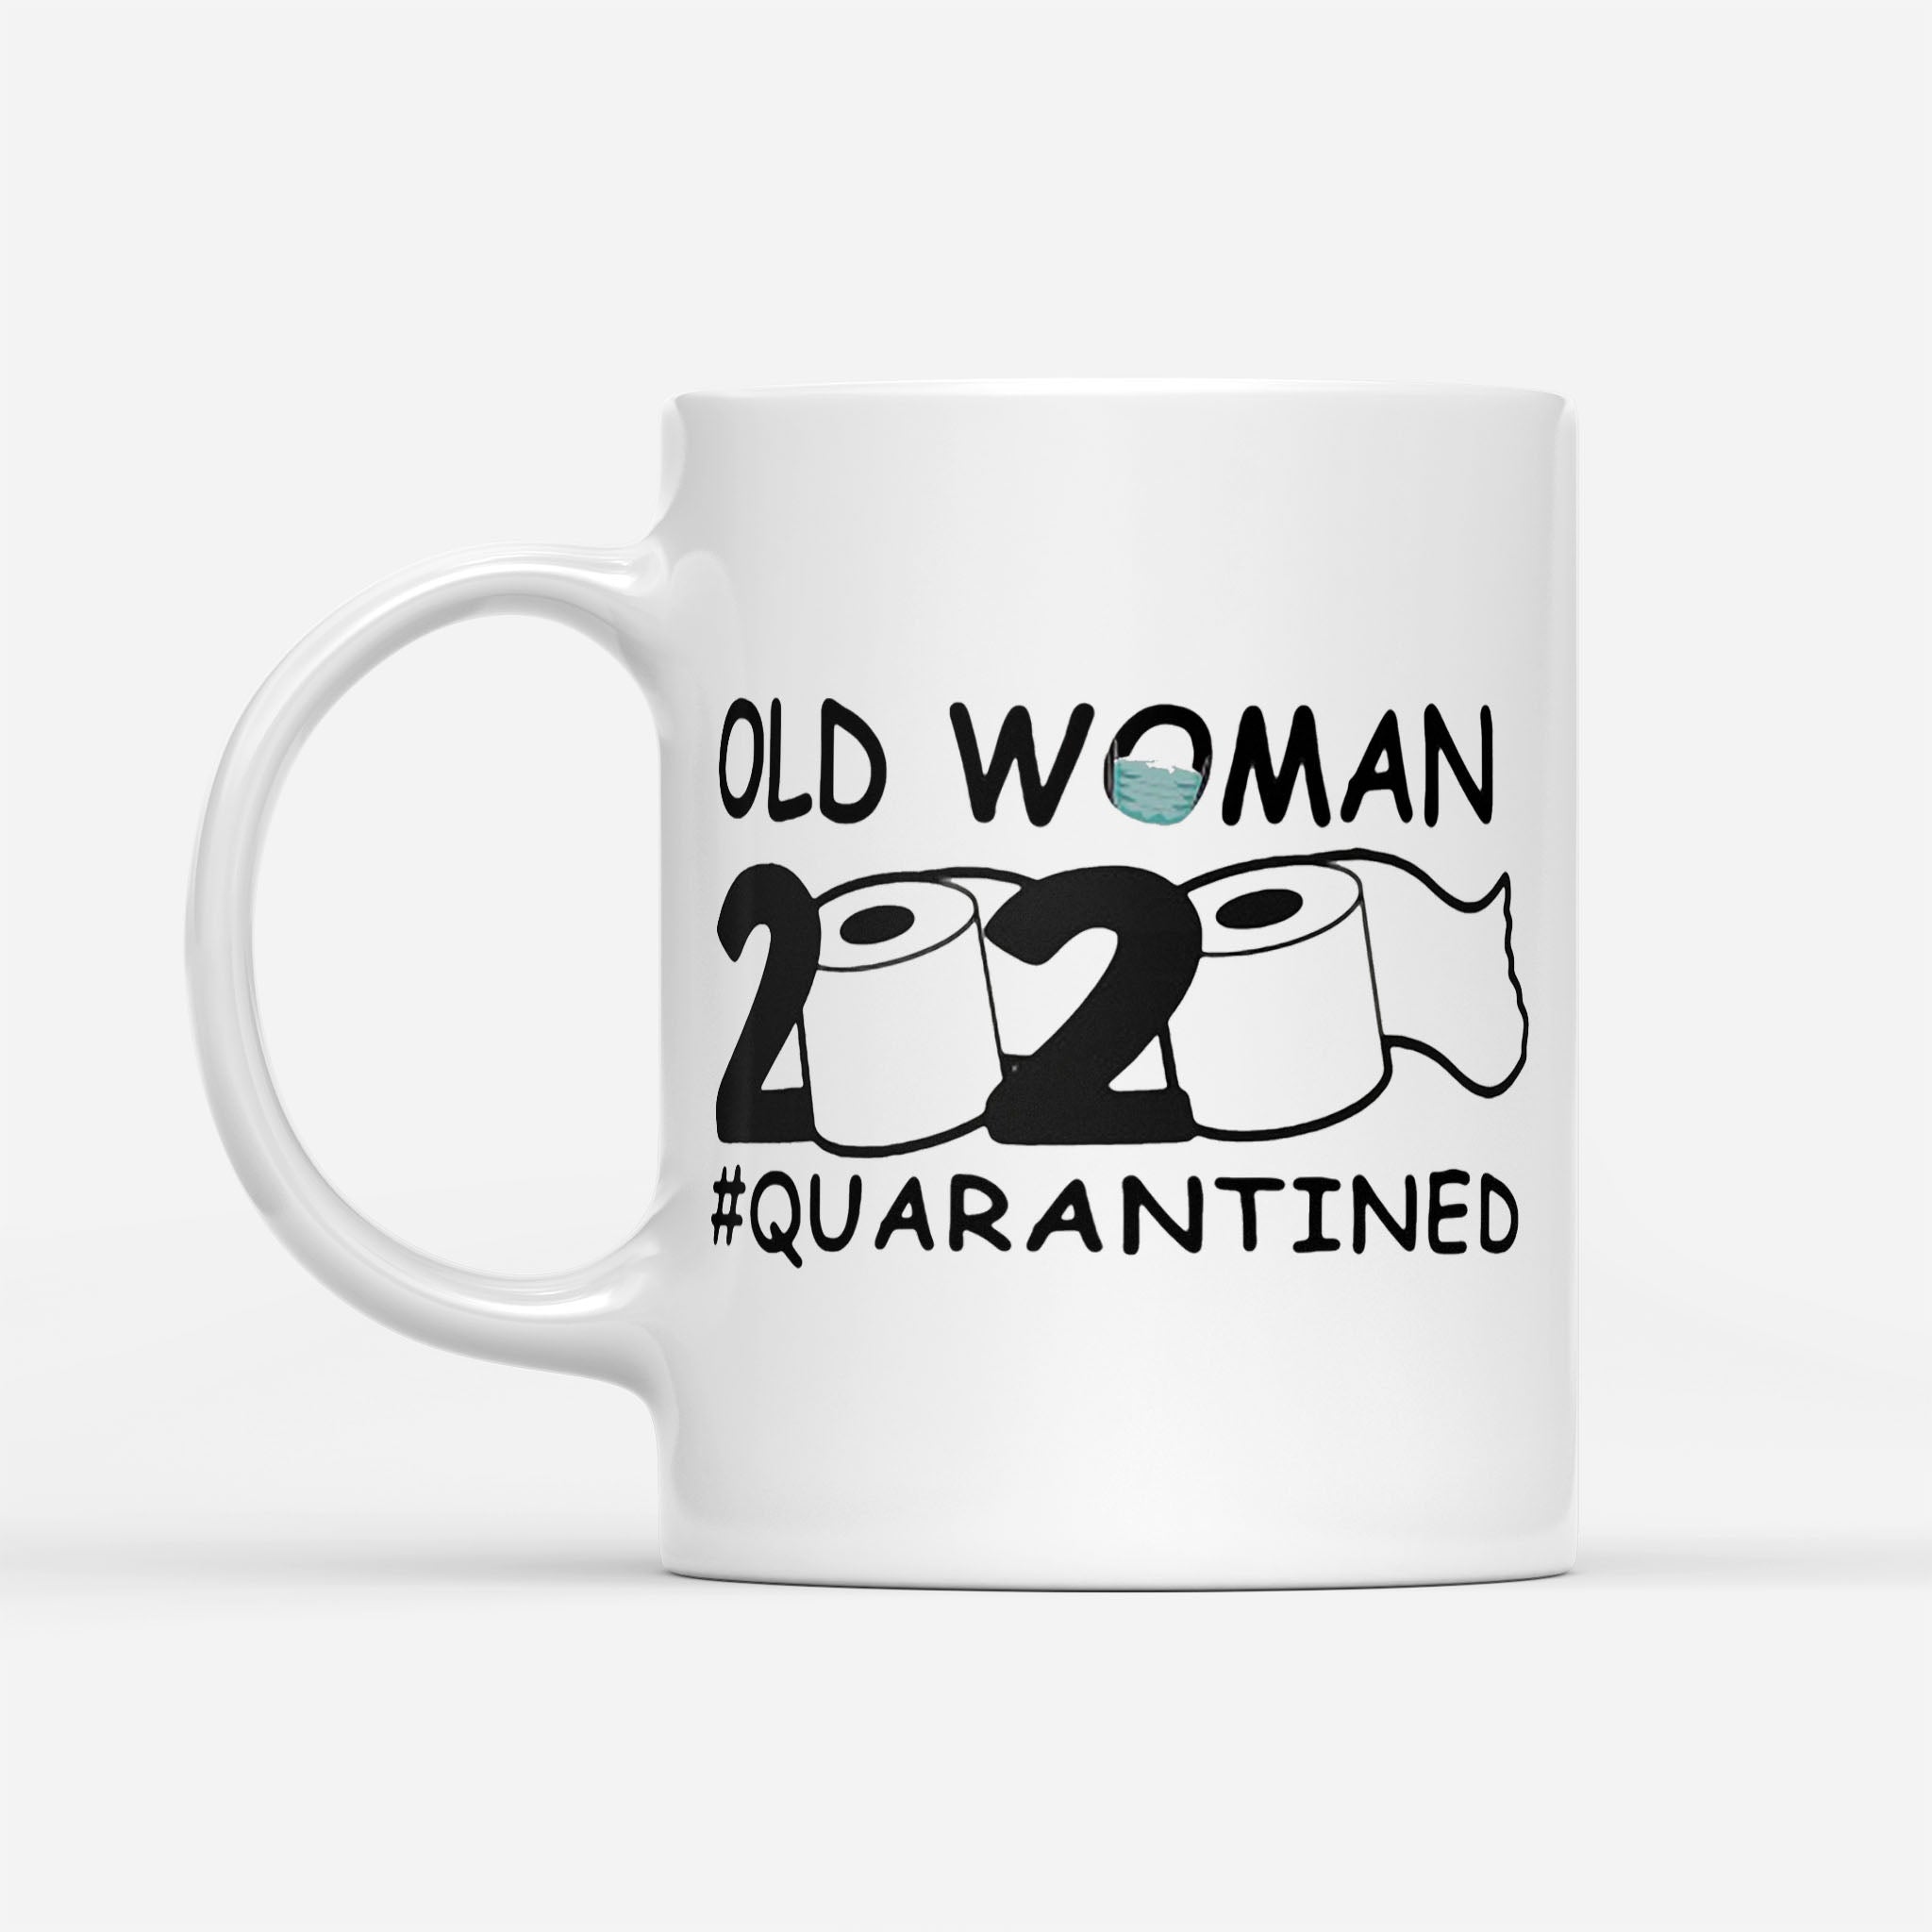 Old Woman 2020 Quarantined - White Mug